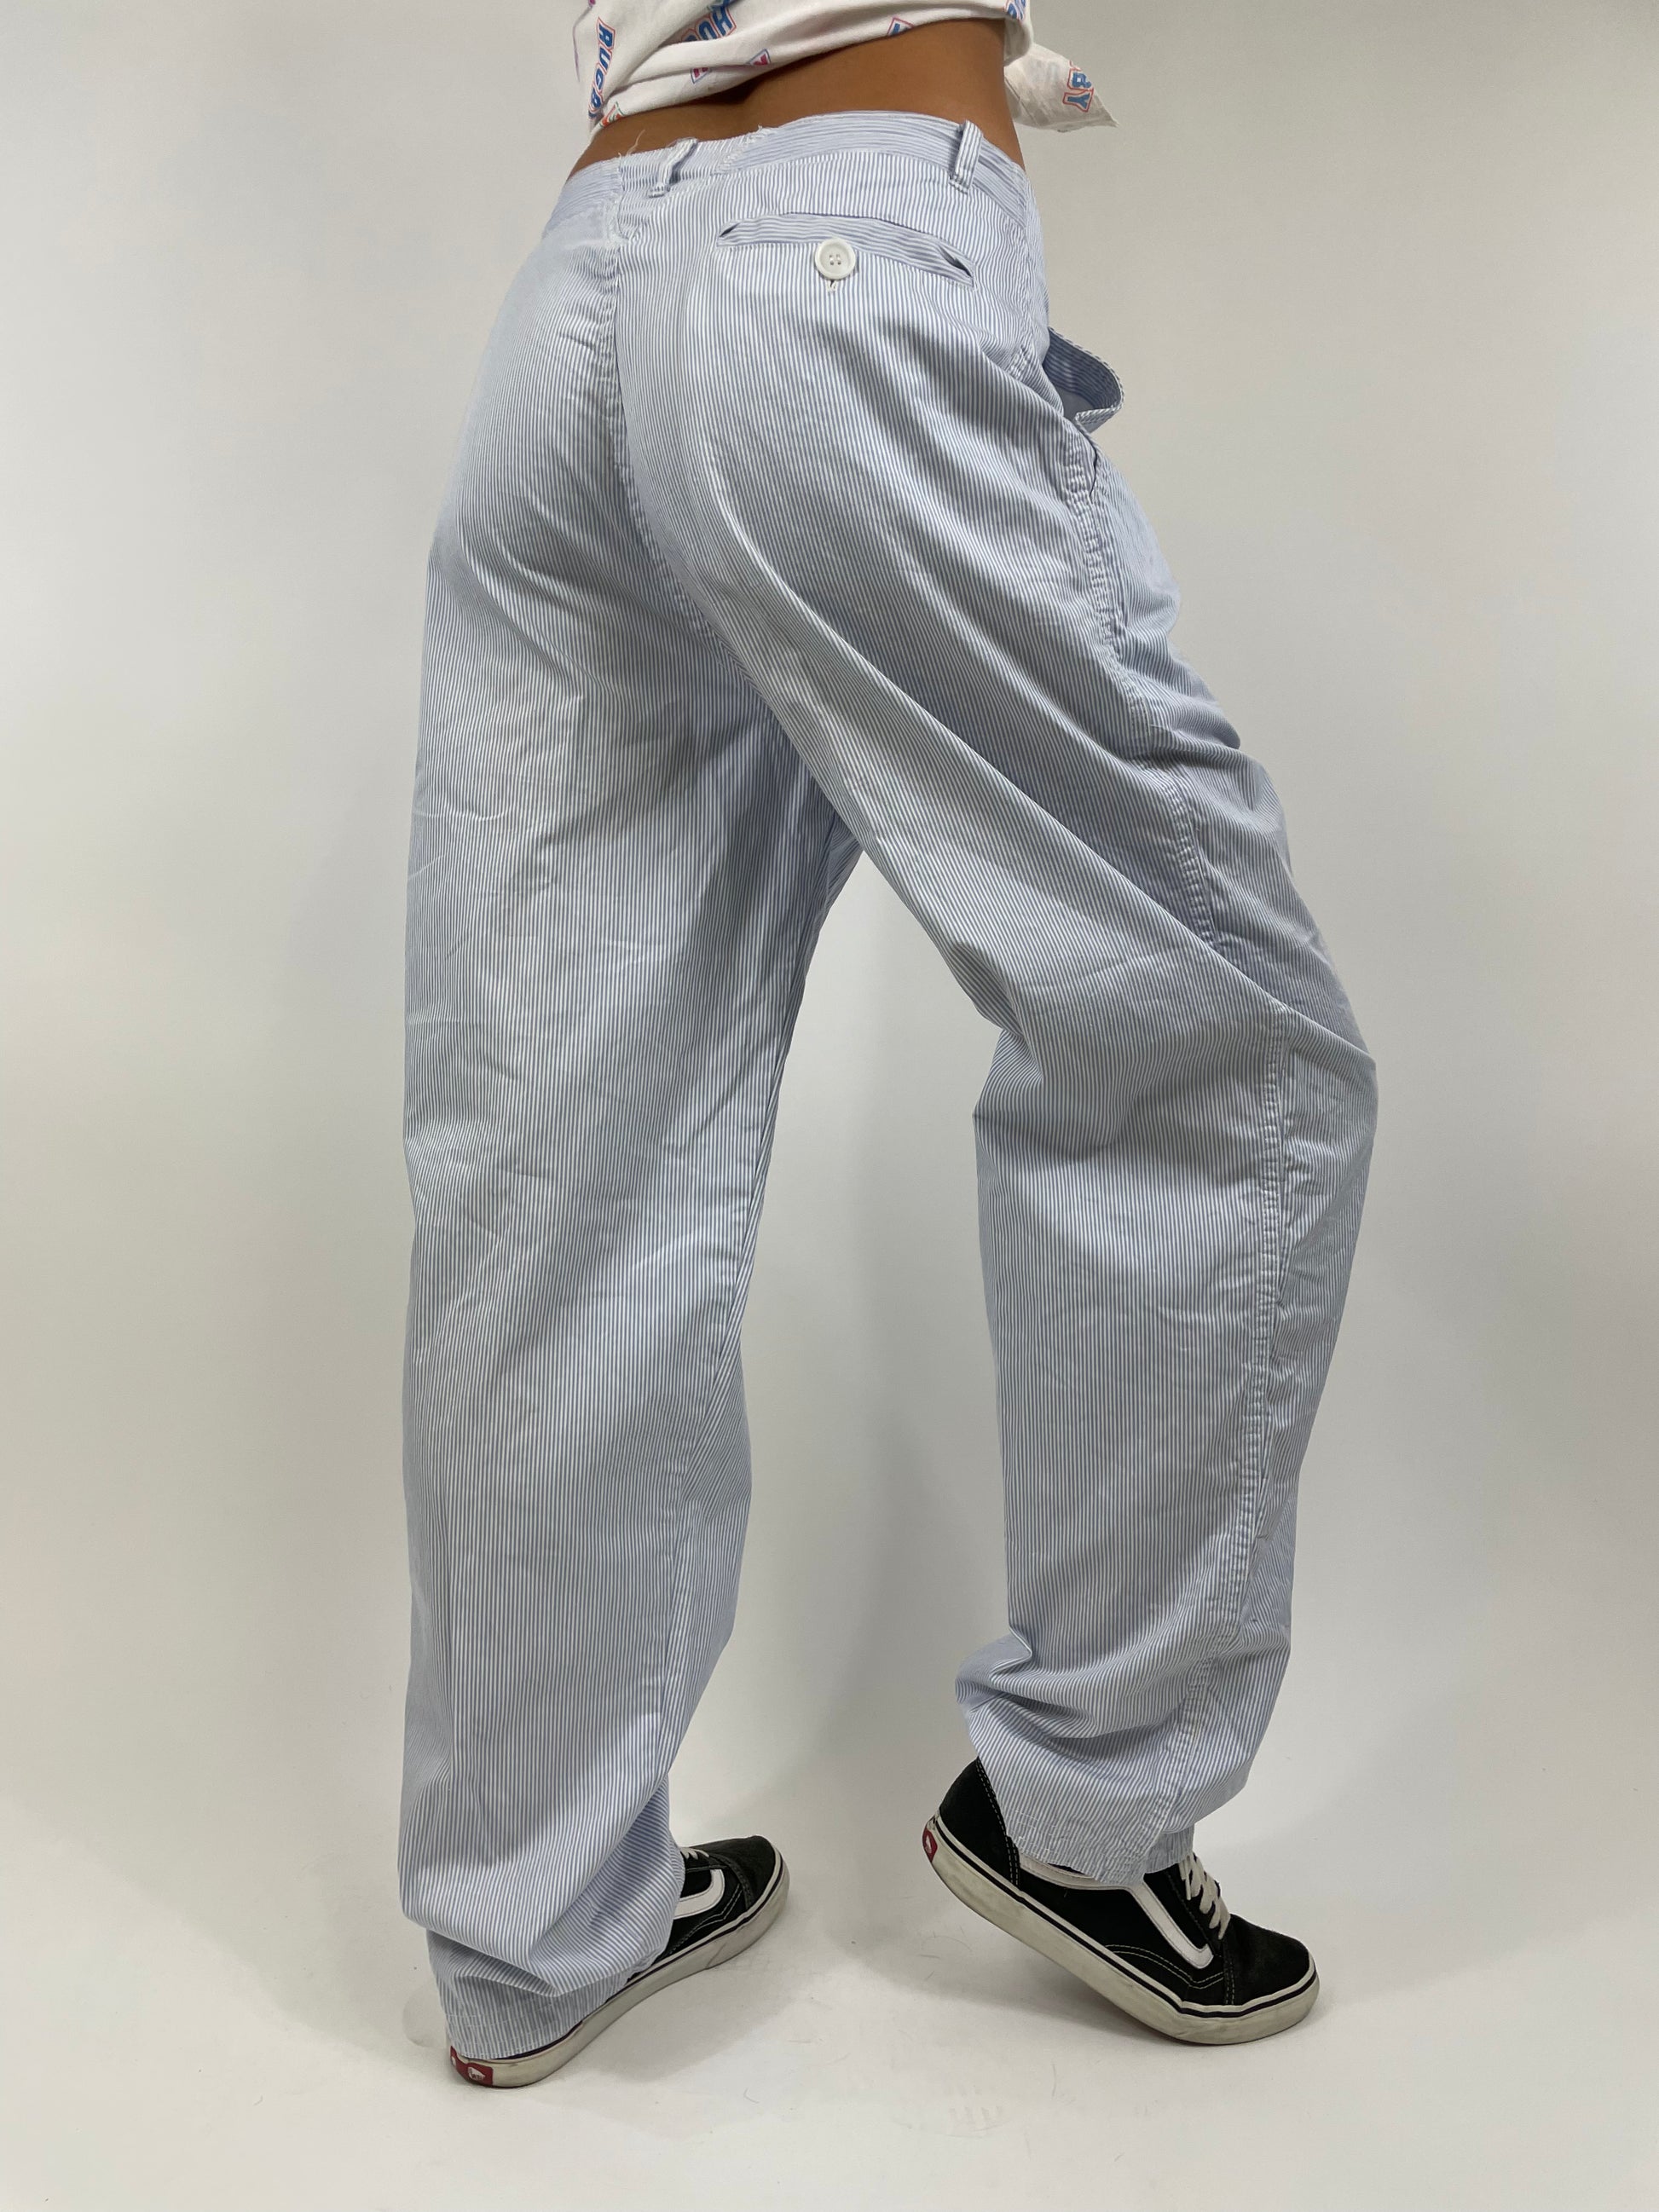 pantaloni-vintage-a-righe-celeste-e-bianco